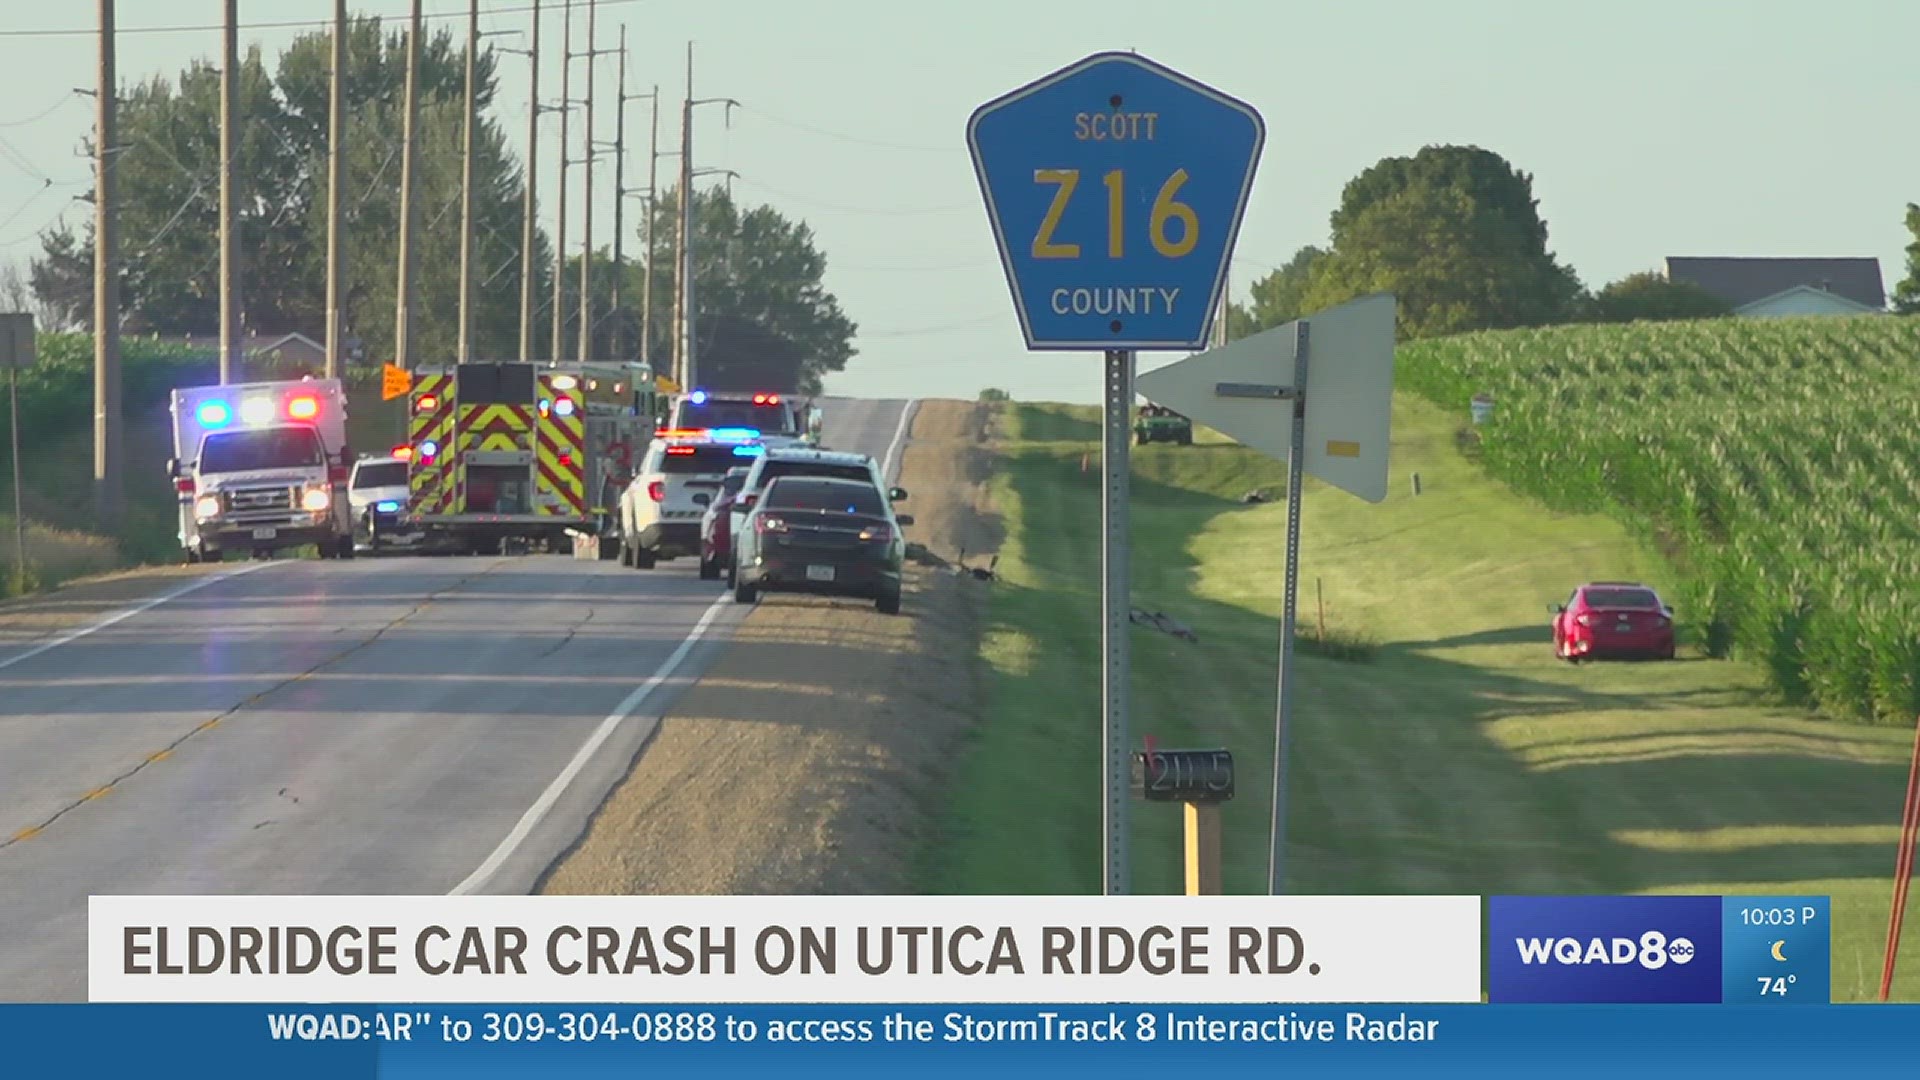 The crash occurred on Utica Ridge Road.